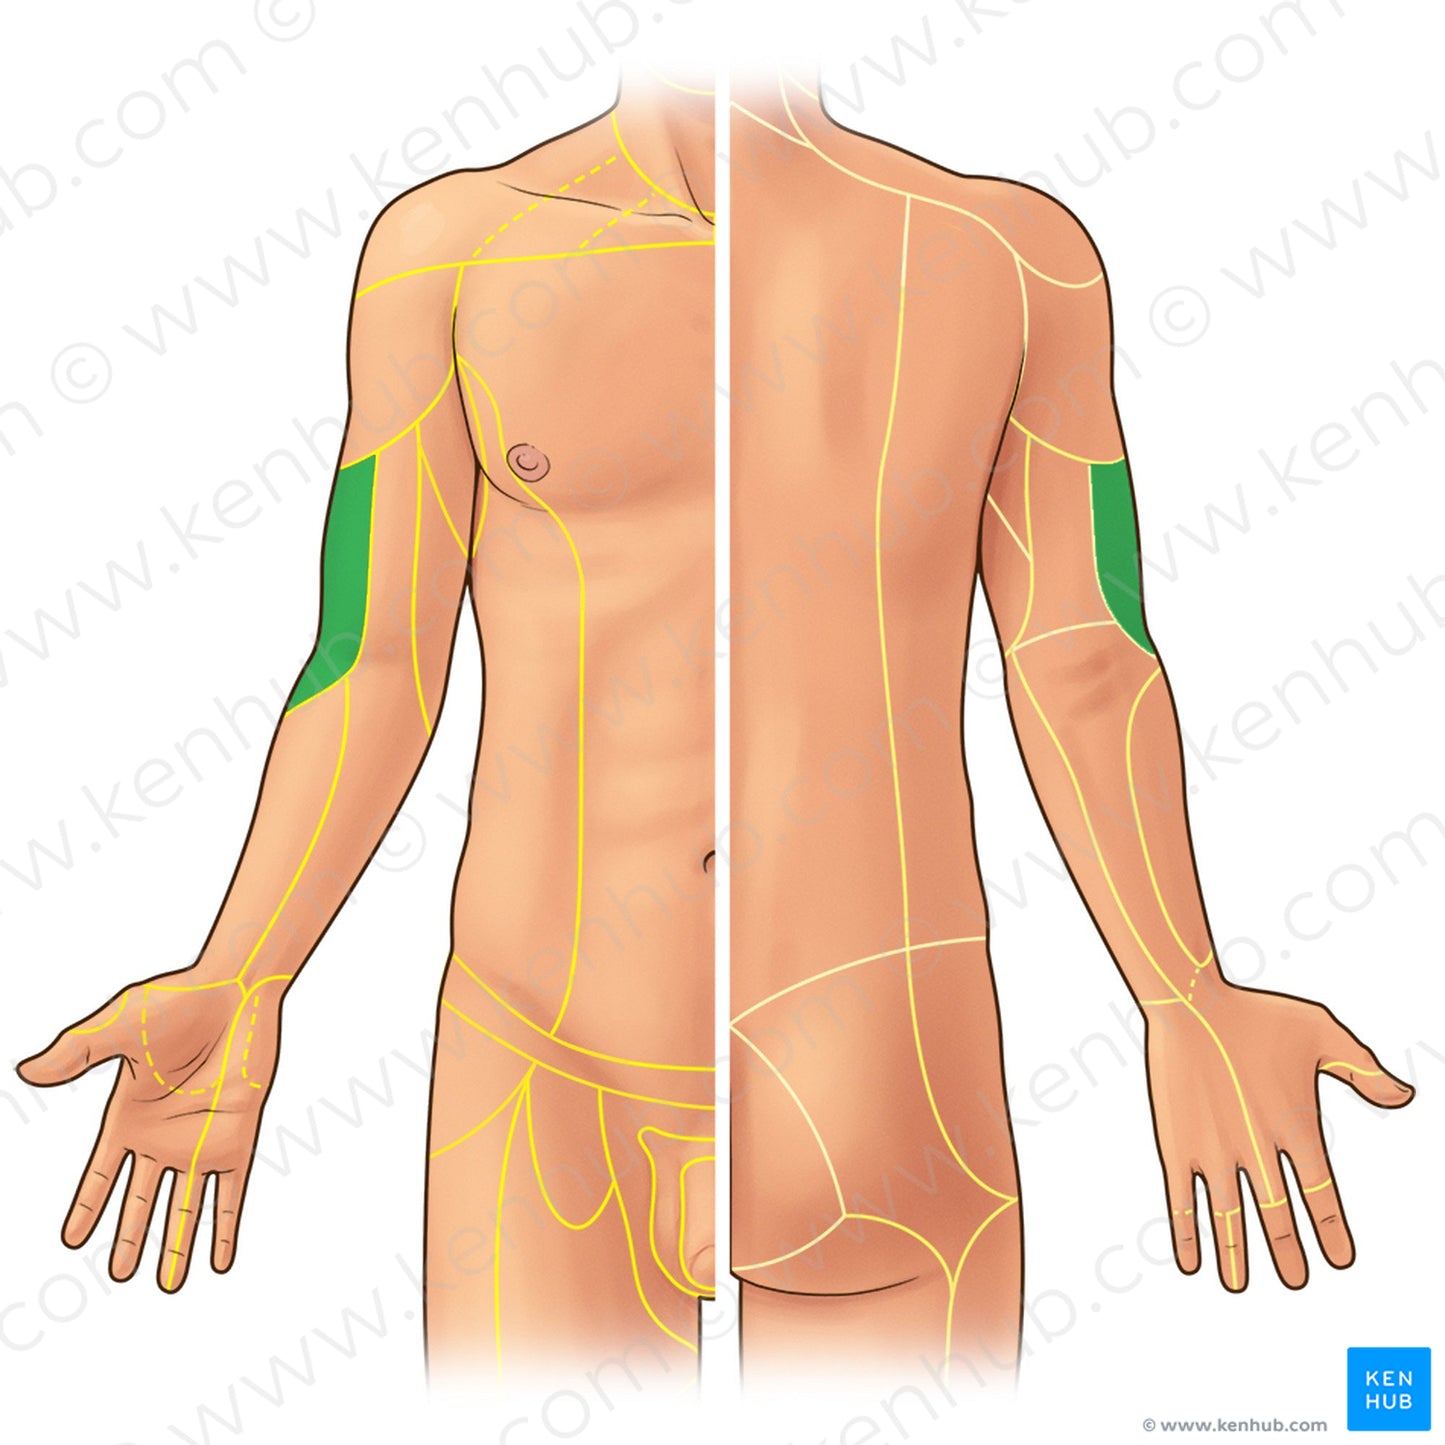 Inferior lateral brachial cutaneous nerve (#21909)